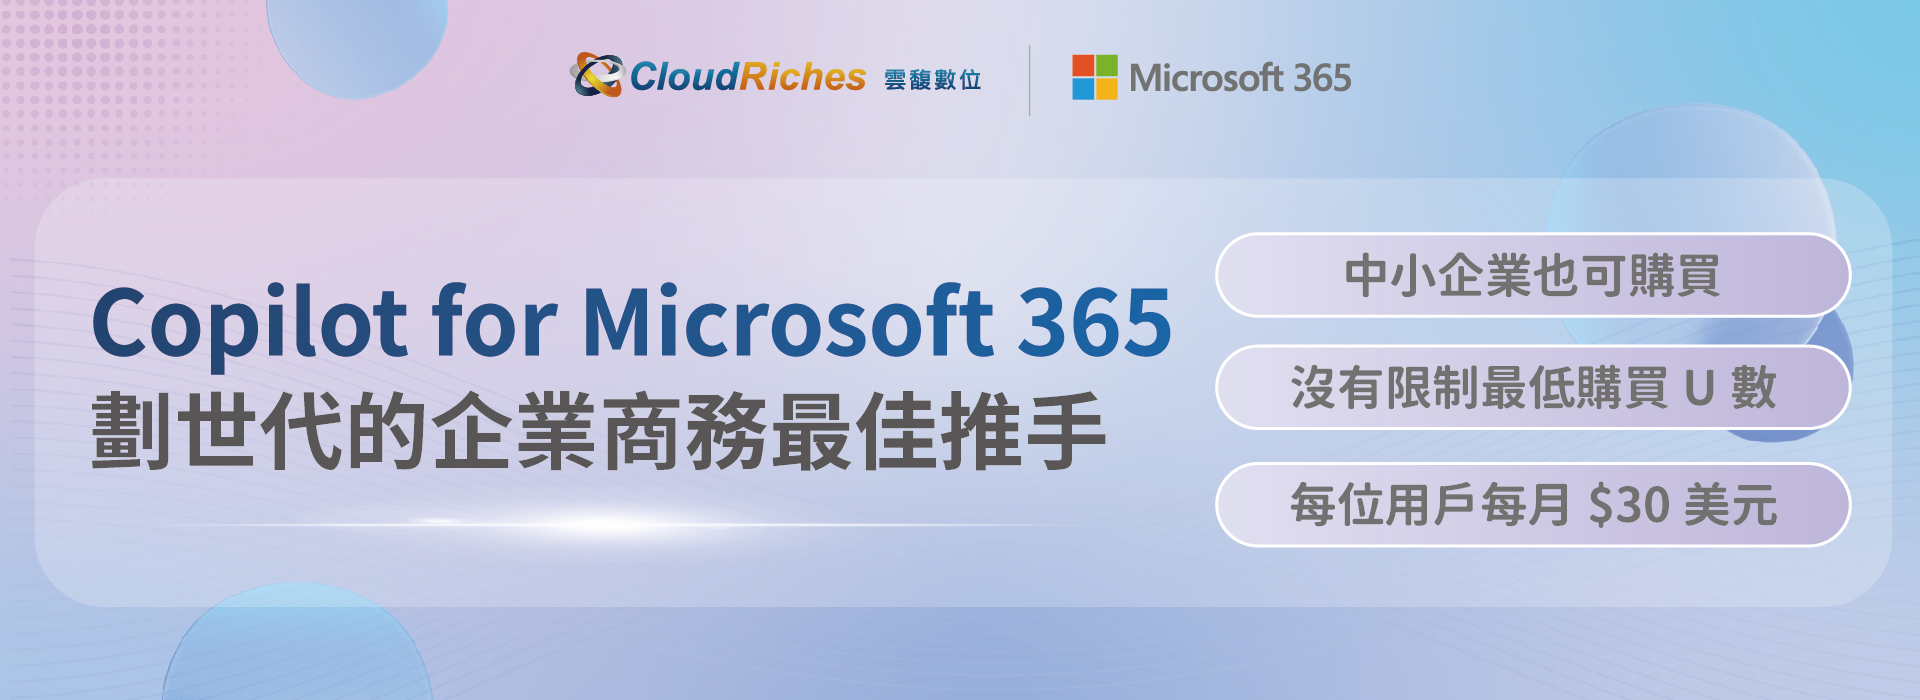 Copilot for Microsoft 365 劃世代的企業商務最佳推手